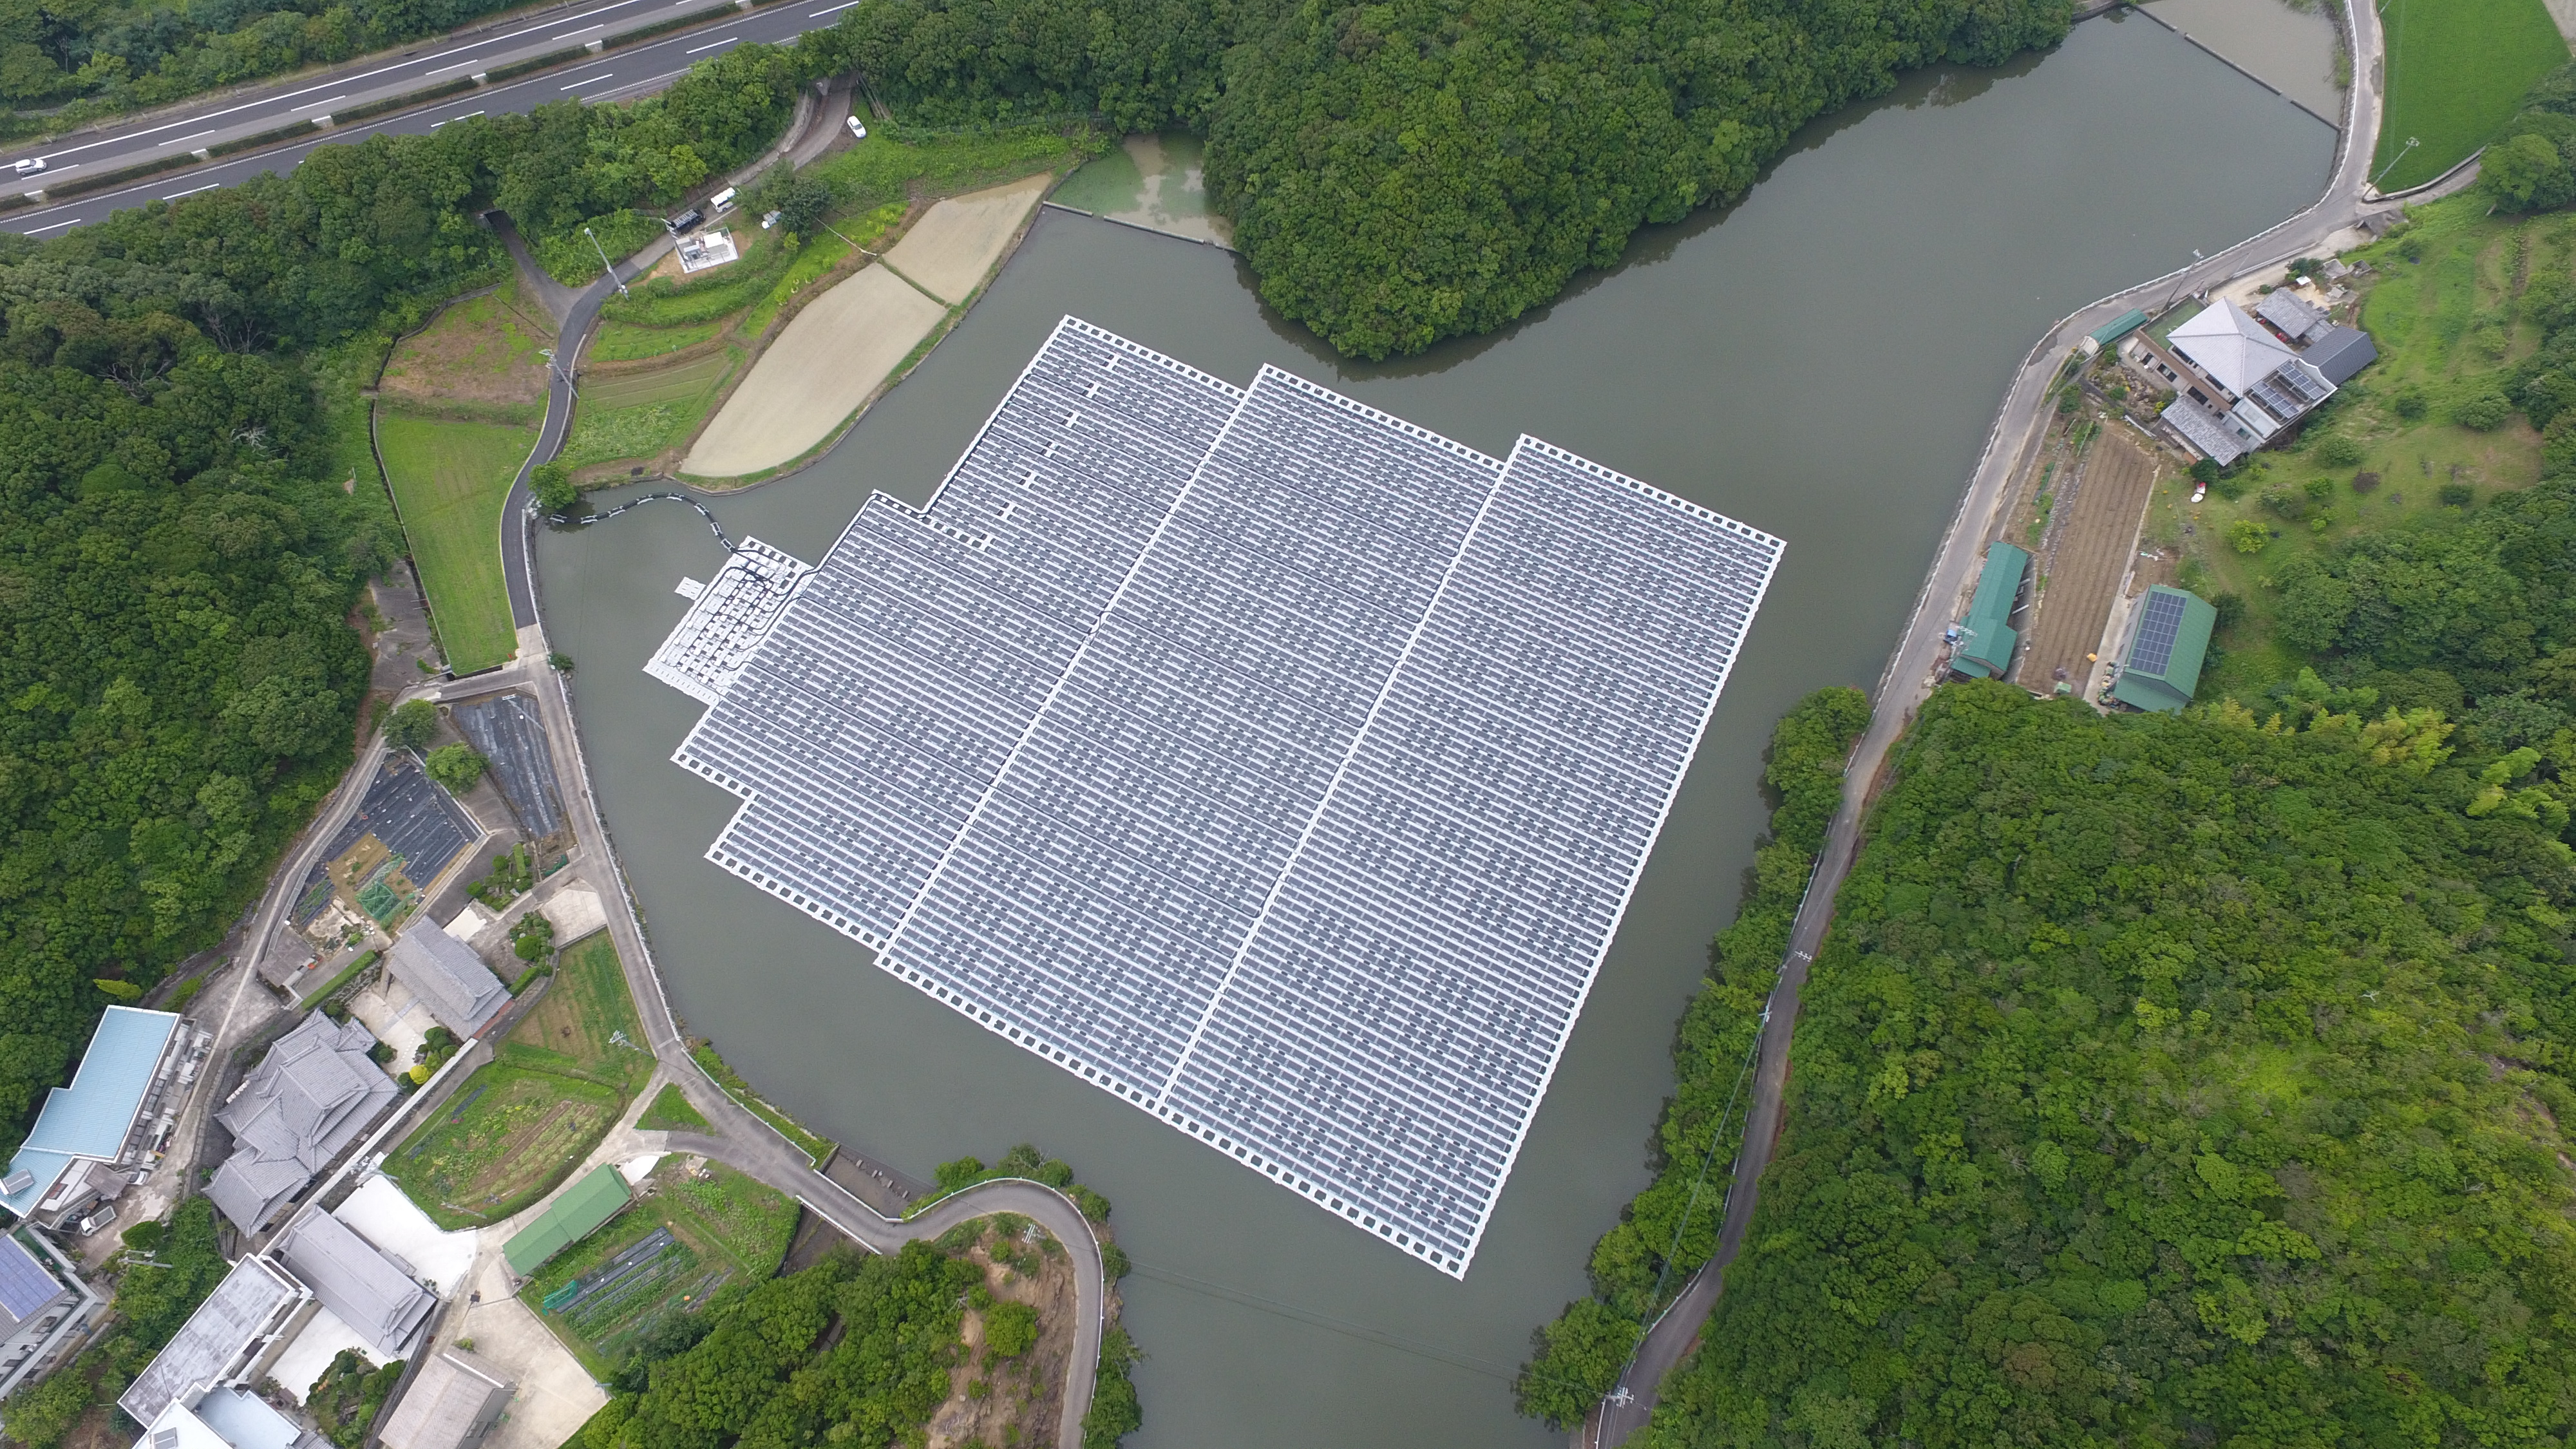 Hikuni Ike floating PV plant in Japan